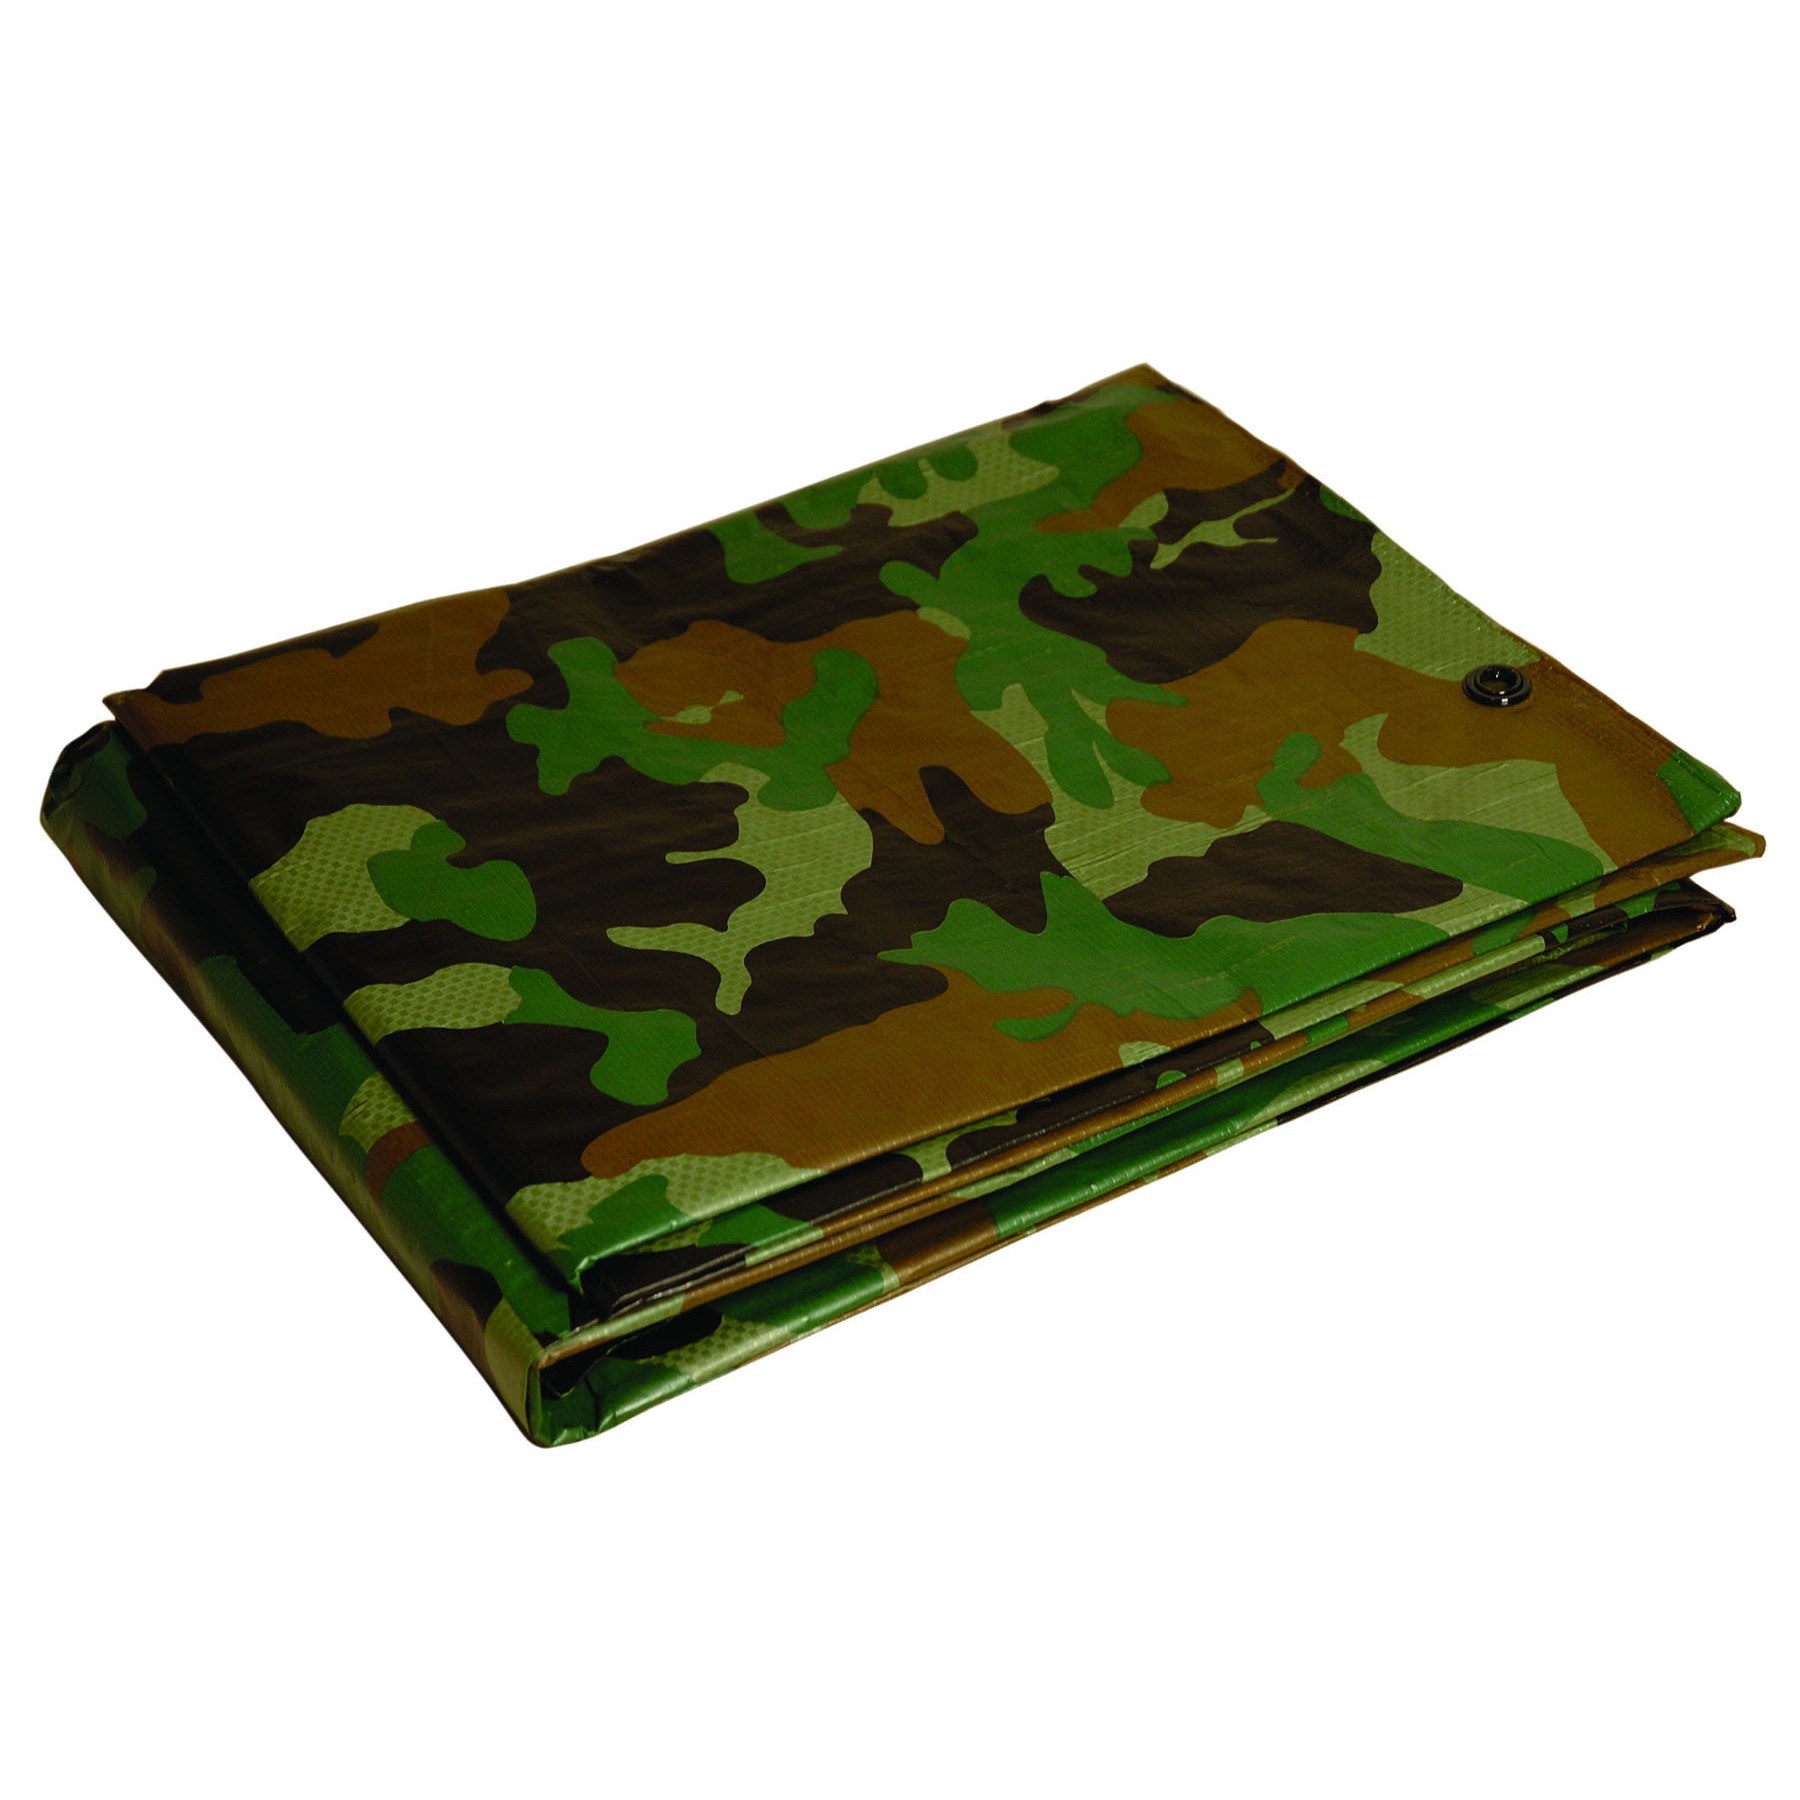 Foremost Dry Top 10 ft. x 12 ft. Medium Duty Polyethylene Tarp Camouflage - image 2 of 3